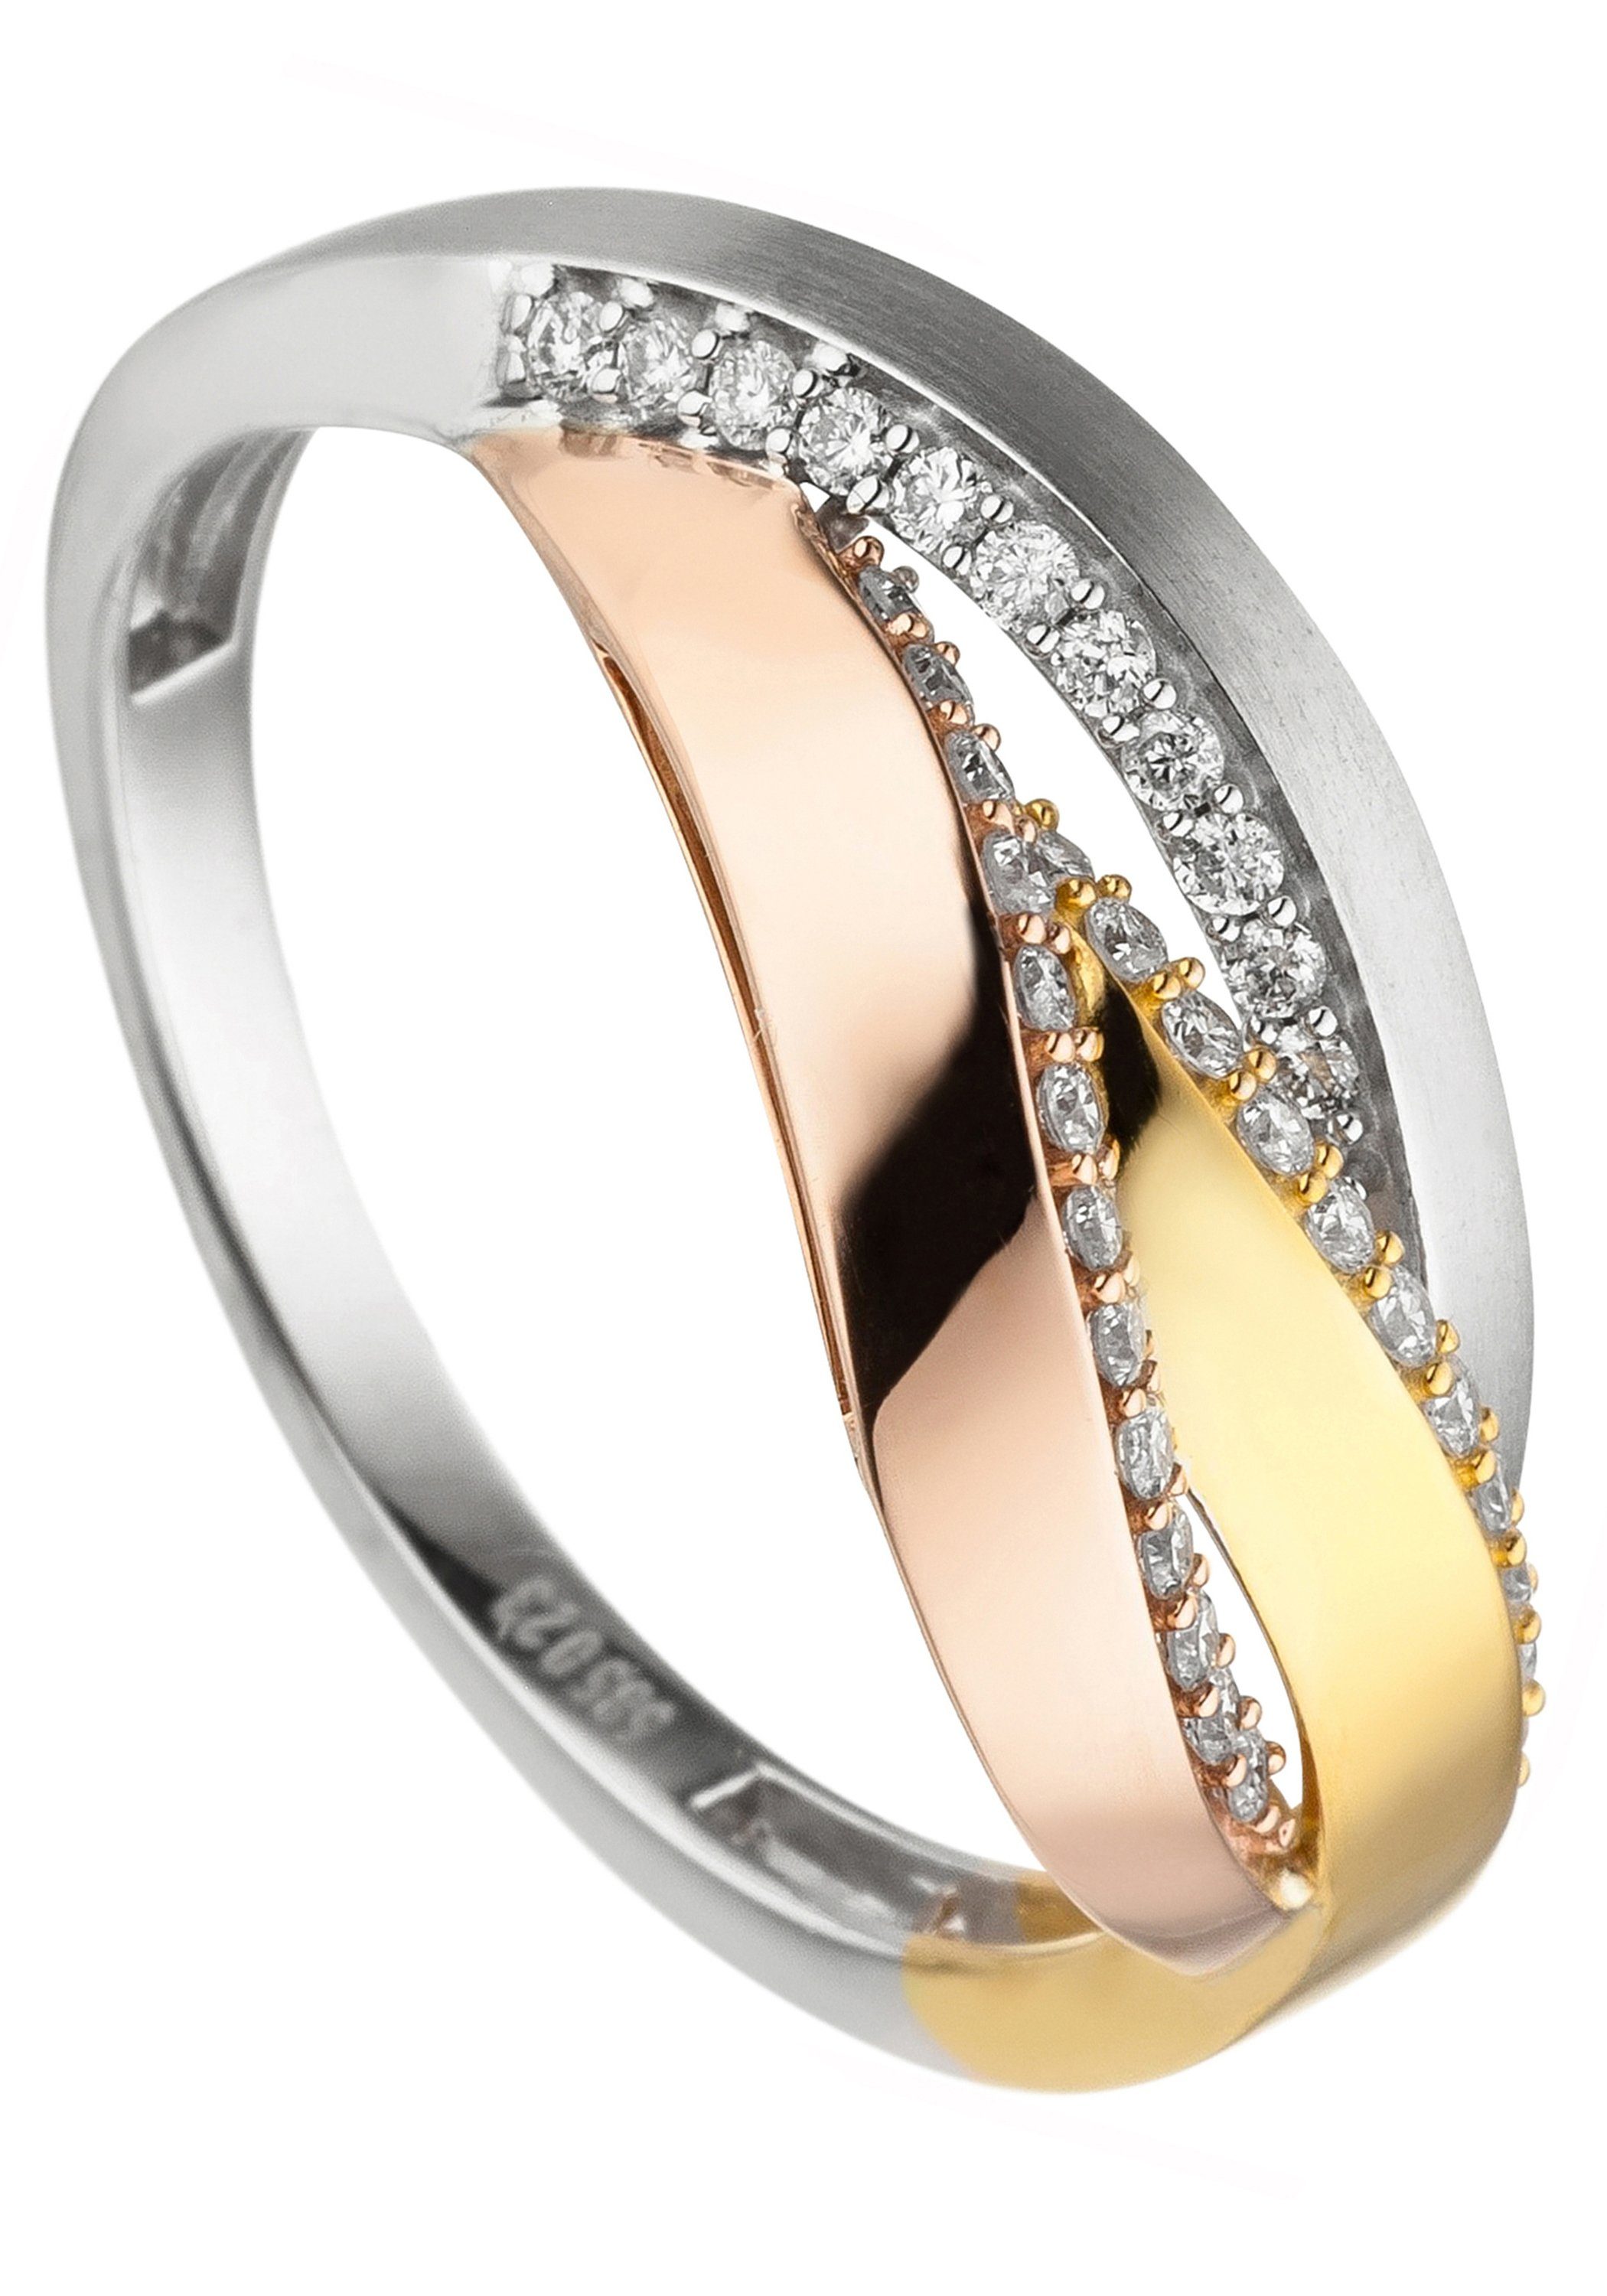 JOBO Fingerring Tricolor-Ring mit 36 Diamanten, 585 Gold